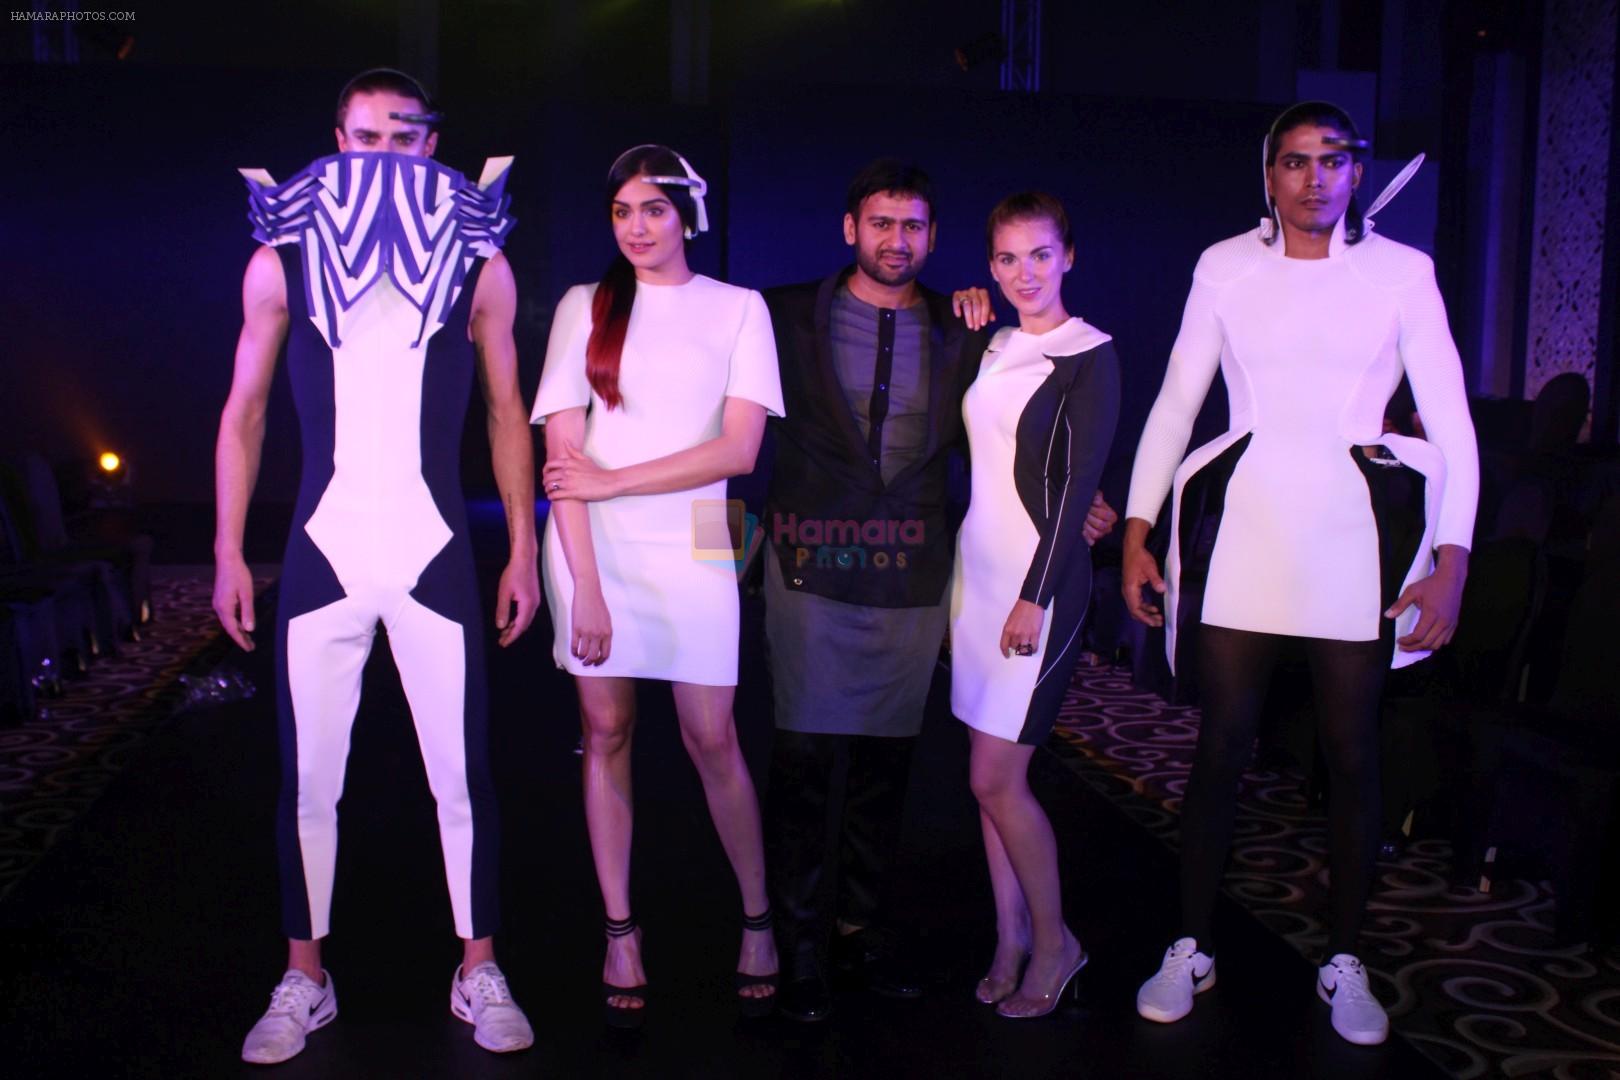 Adah Sharma at Tech Fashion Tour Season 3 on 20th Sept 2017